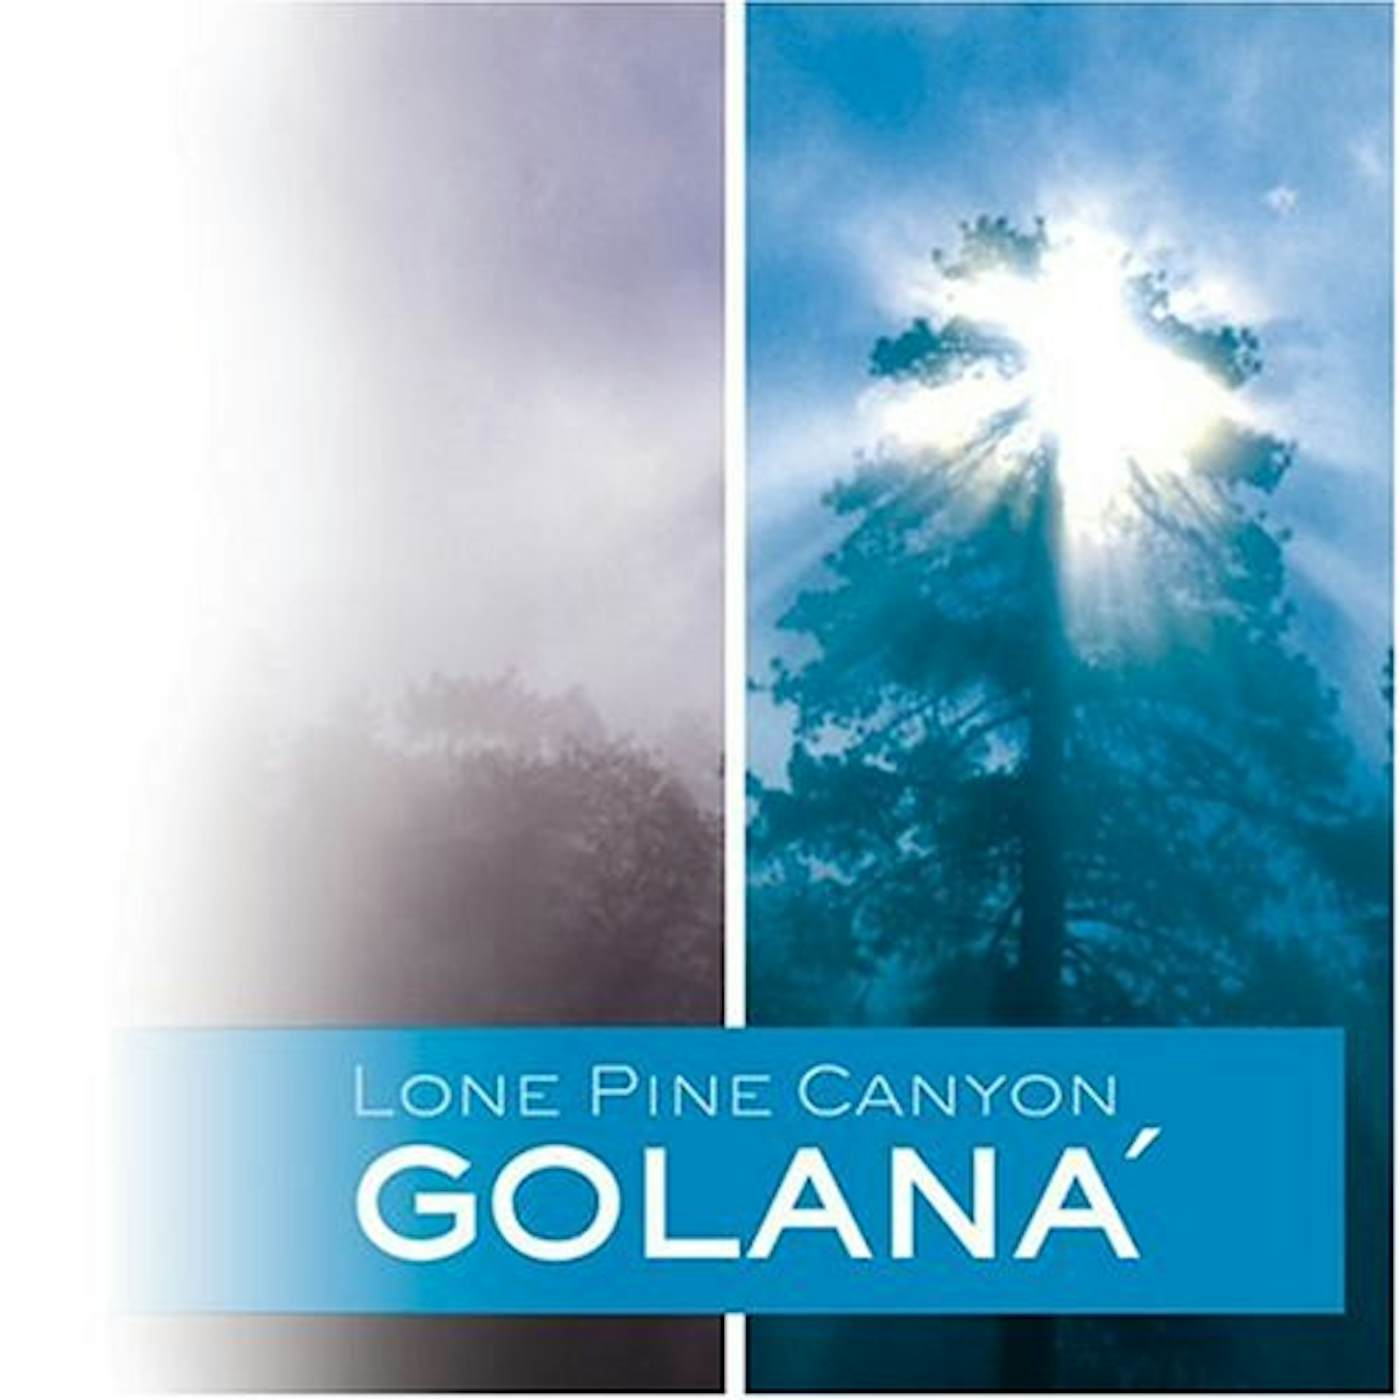 Golana LONE PINE CANYON CD